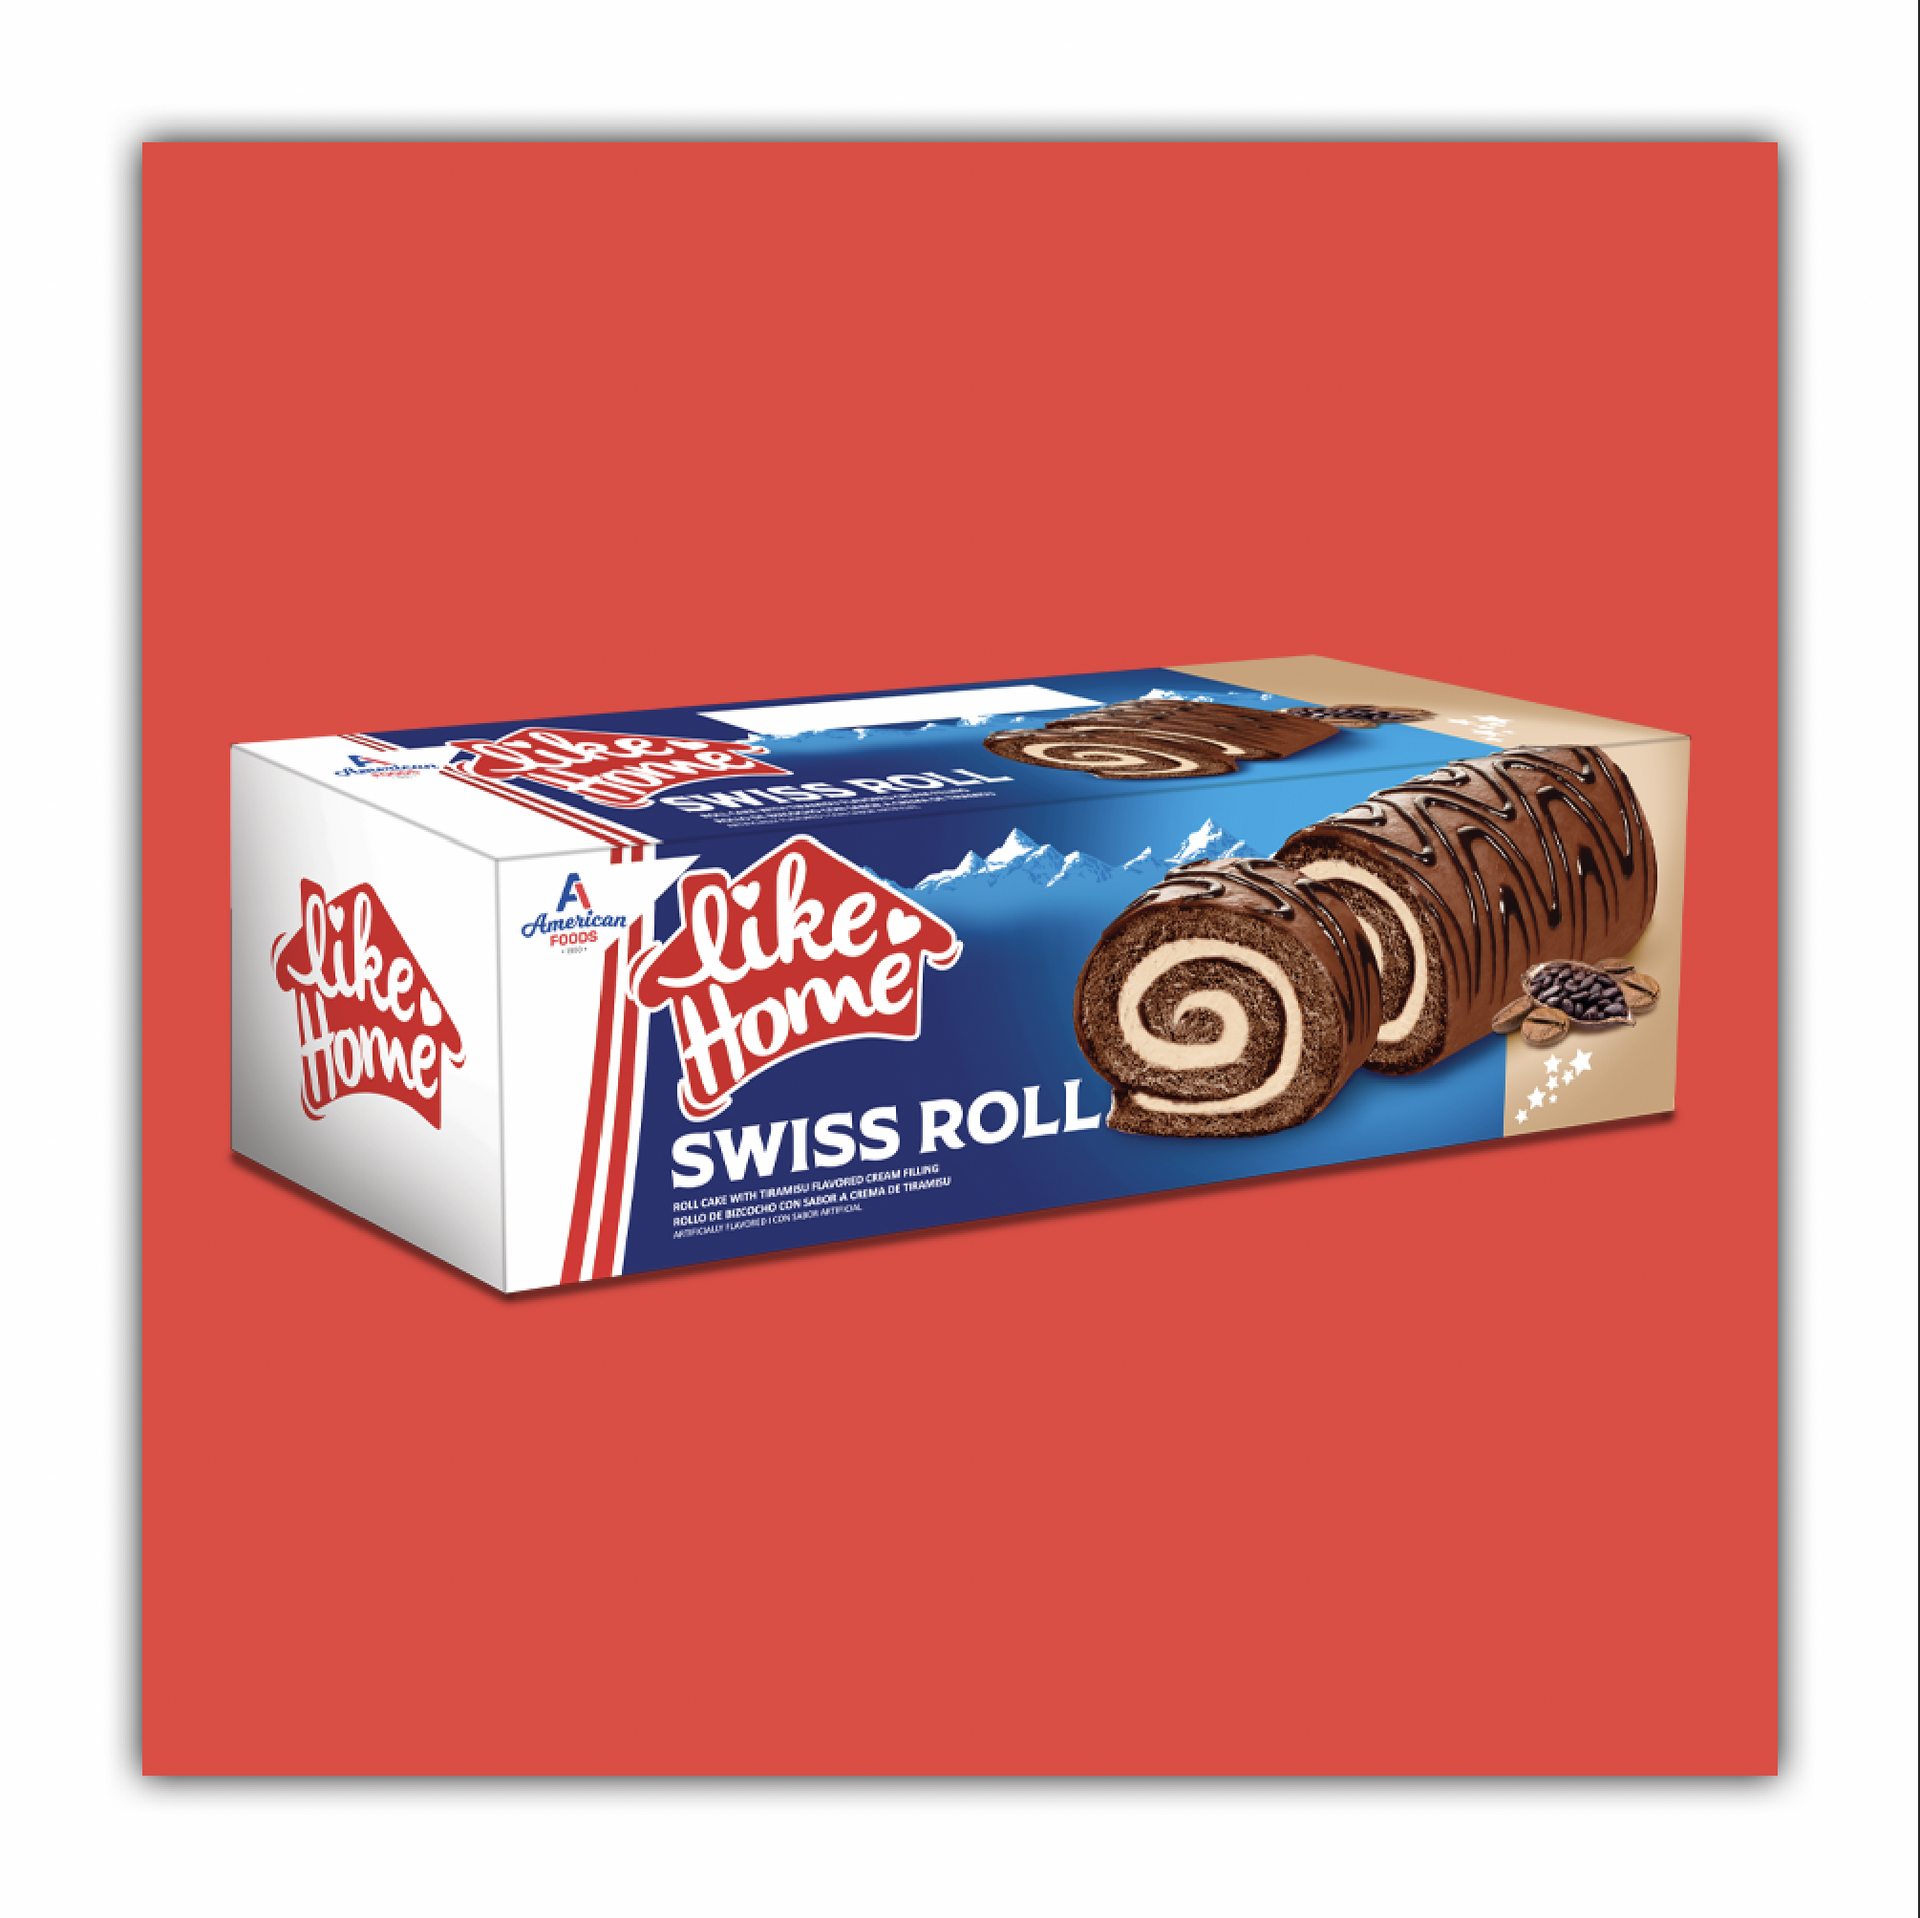 Like-Home-Swiss-Roll-Tia